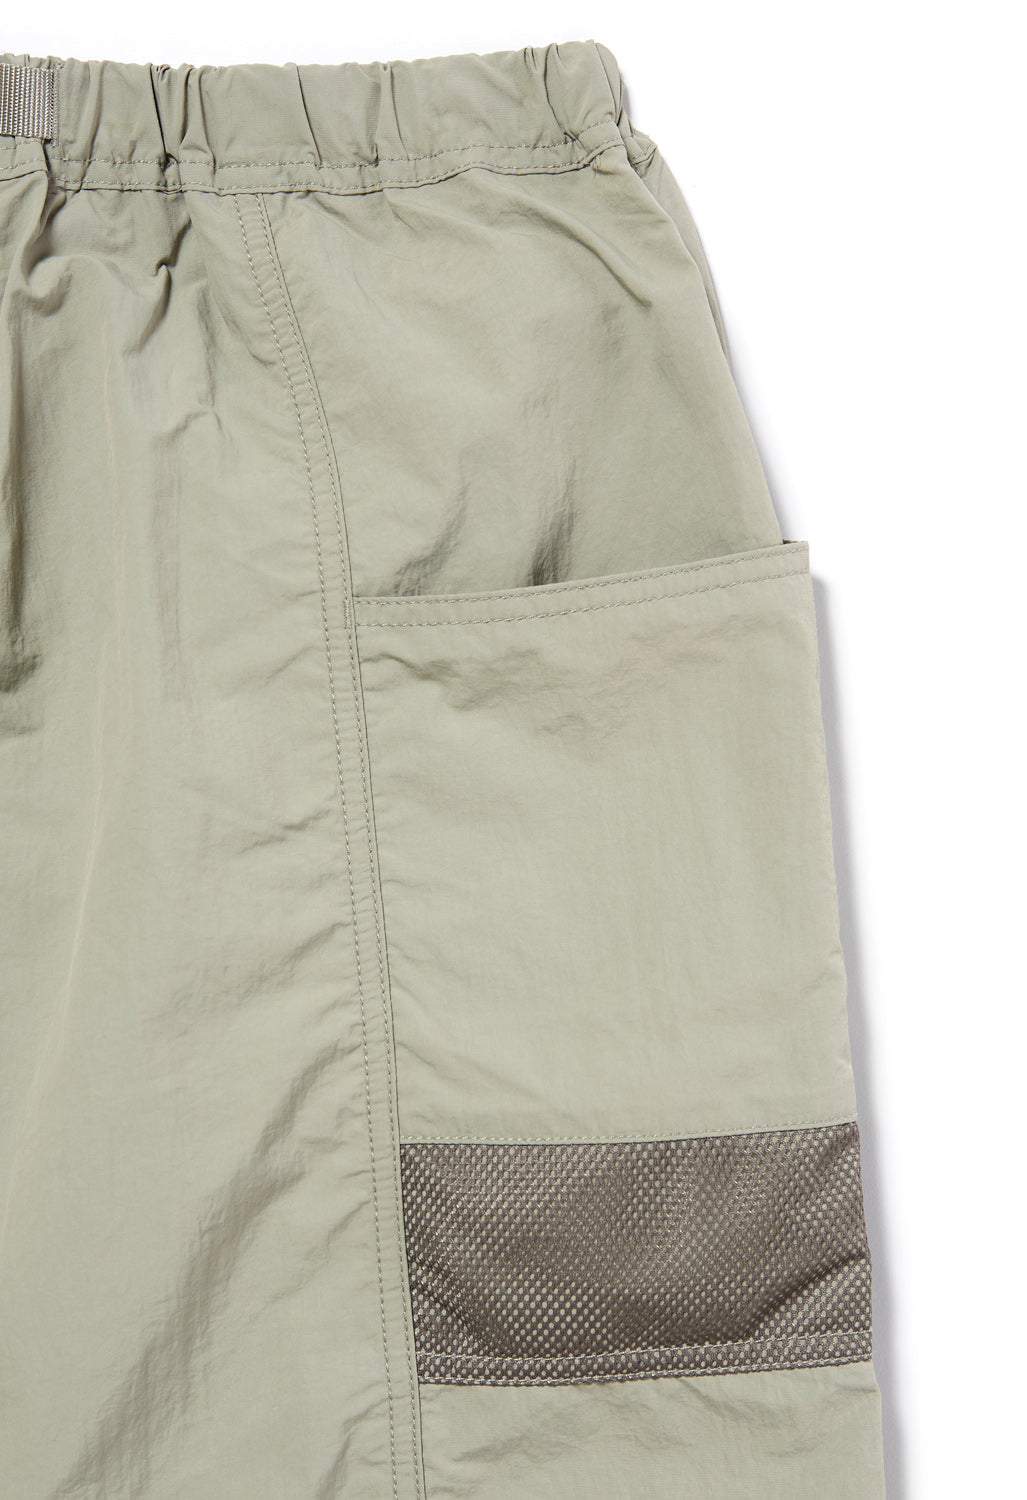 Gramicci x Adsum Men's Nylon Gear Shorts - Dry Sage